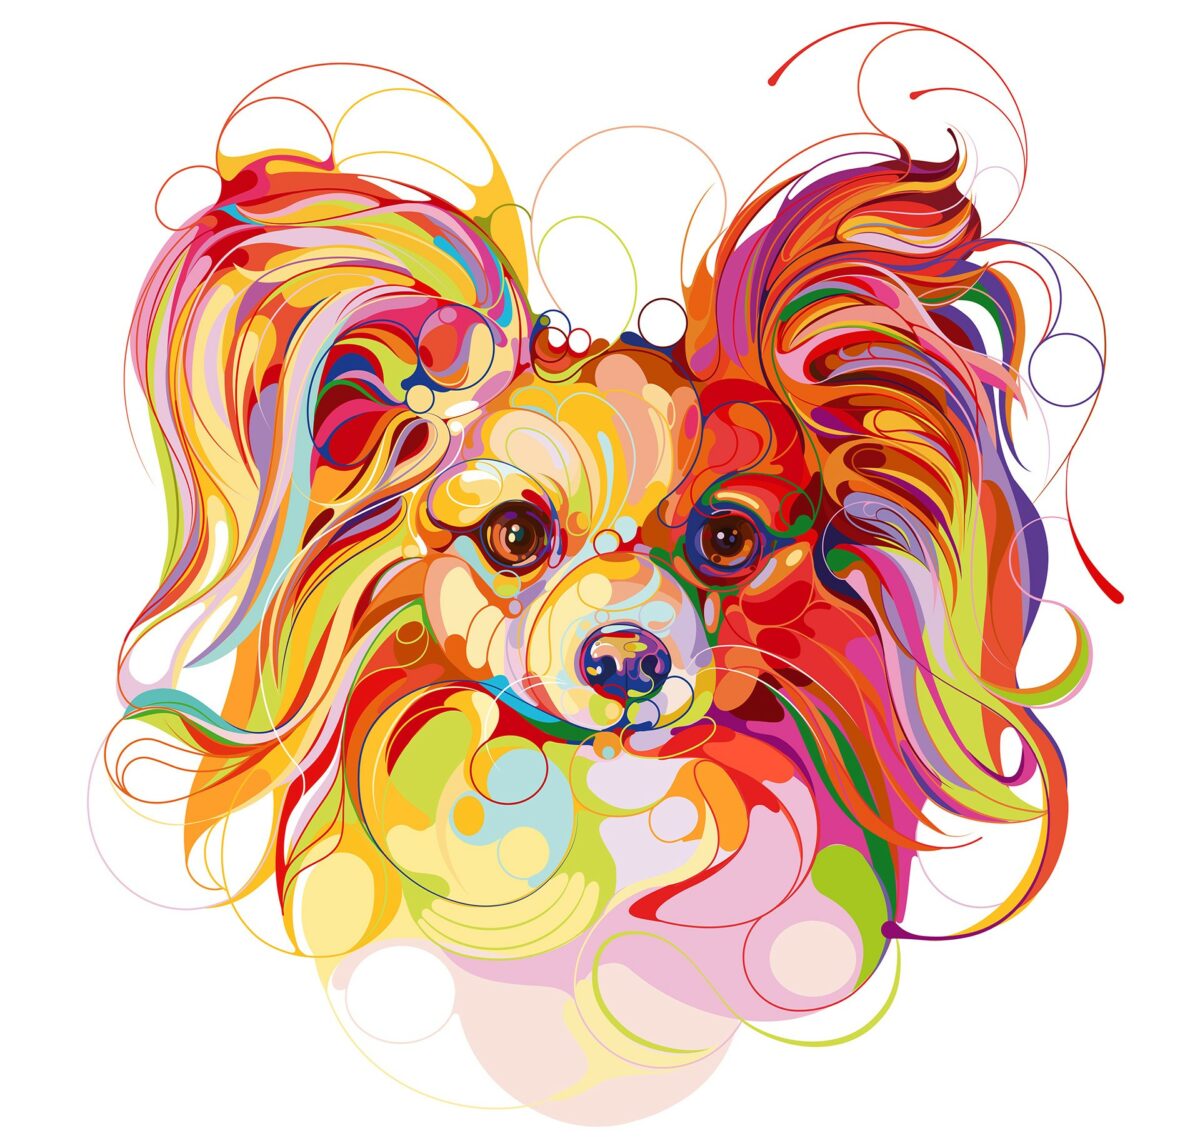 Kaleidoscopic Illustrations Of Expressive Dogs By Marina Okhromenko 2